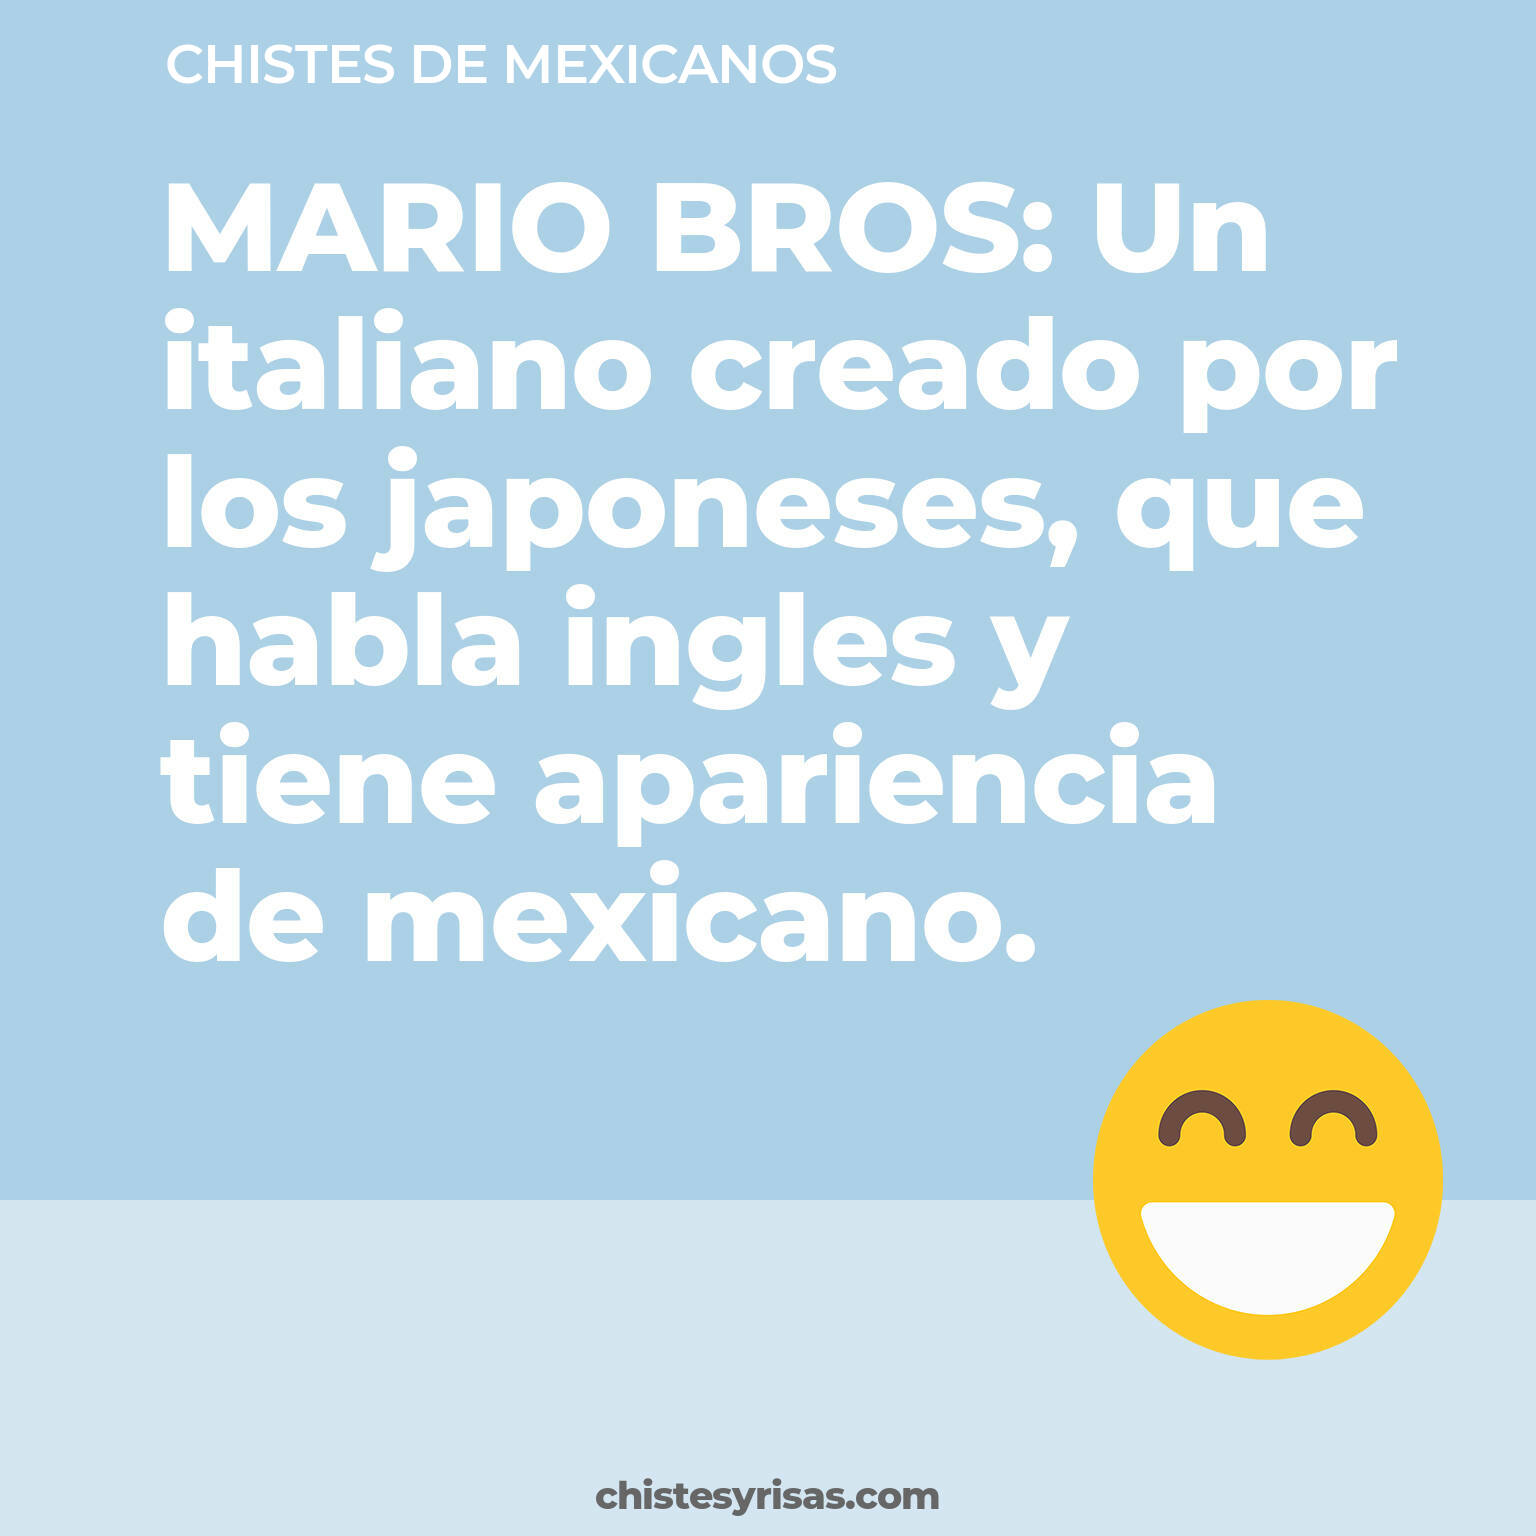 chistes de Mexicanos cortos